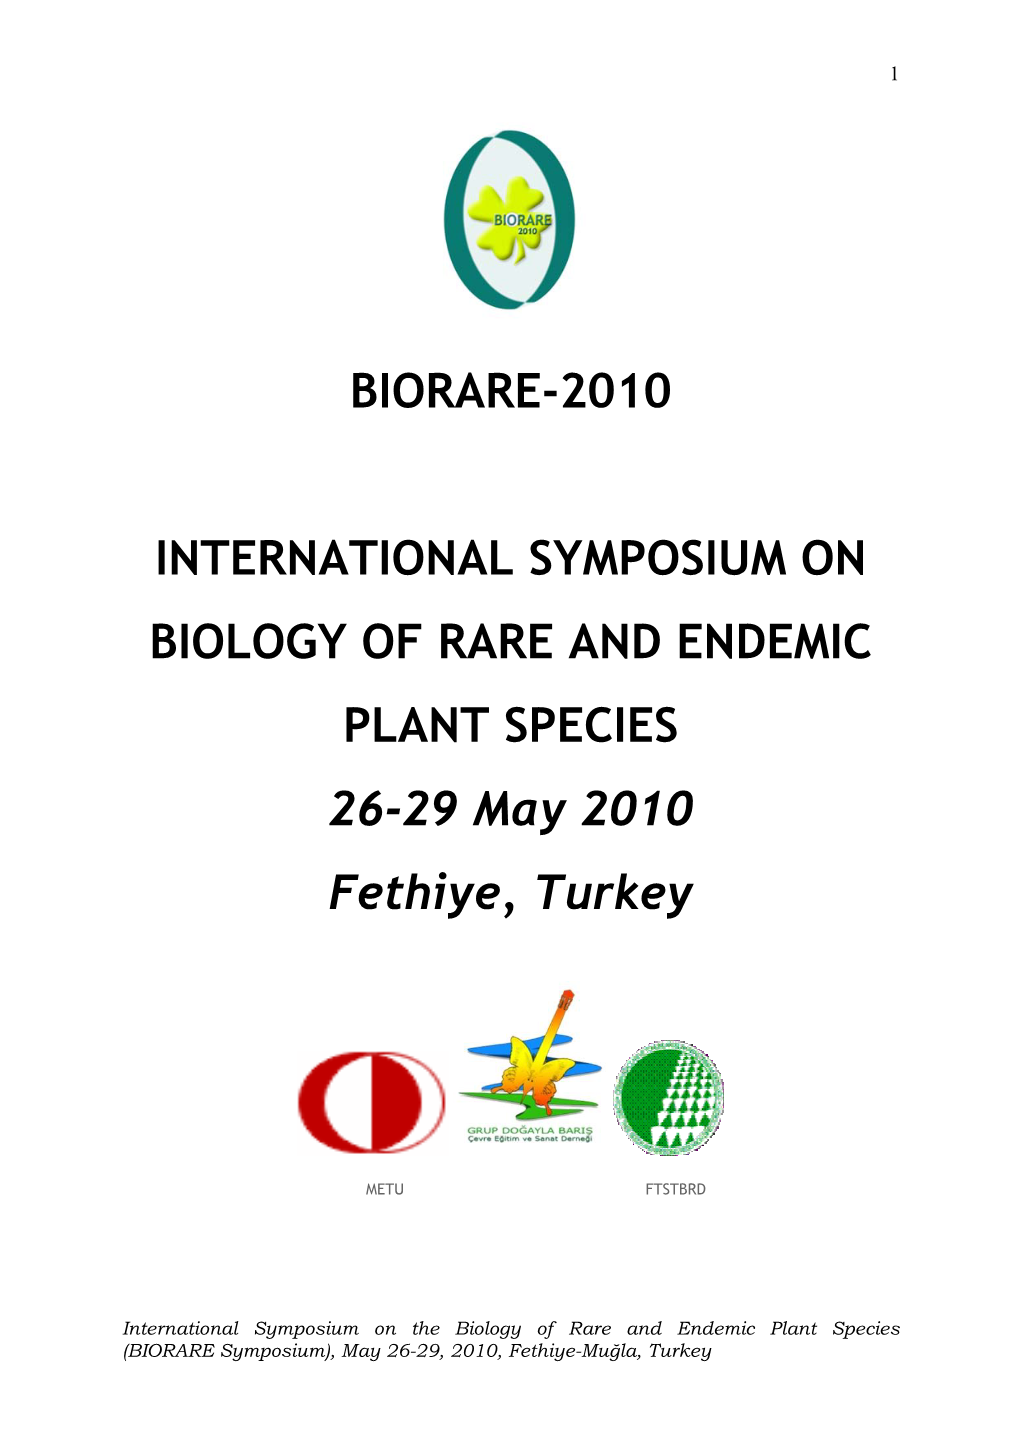 Biorare-2010 International Symposium on Biology Of